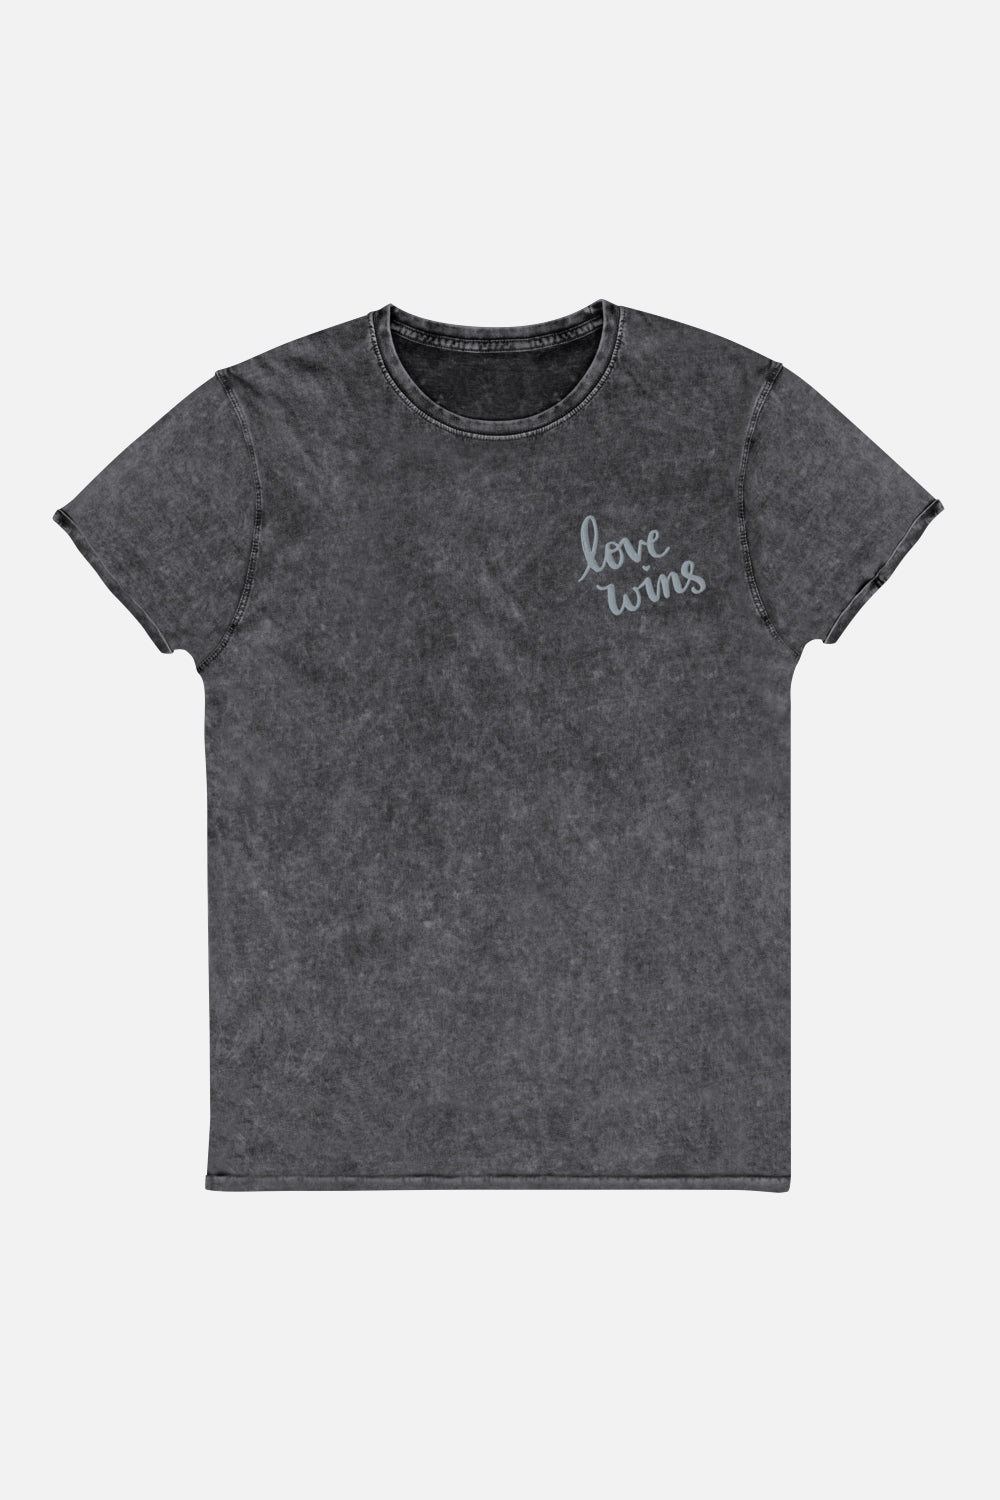 Love Wins Unisex Denim T-Shirt